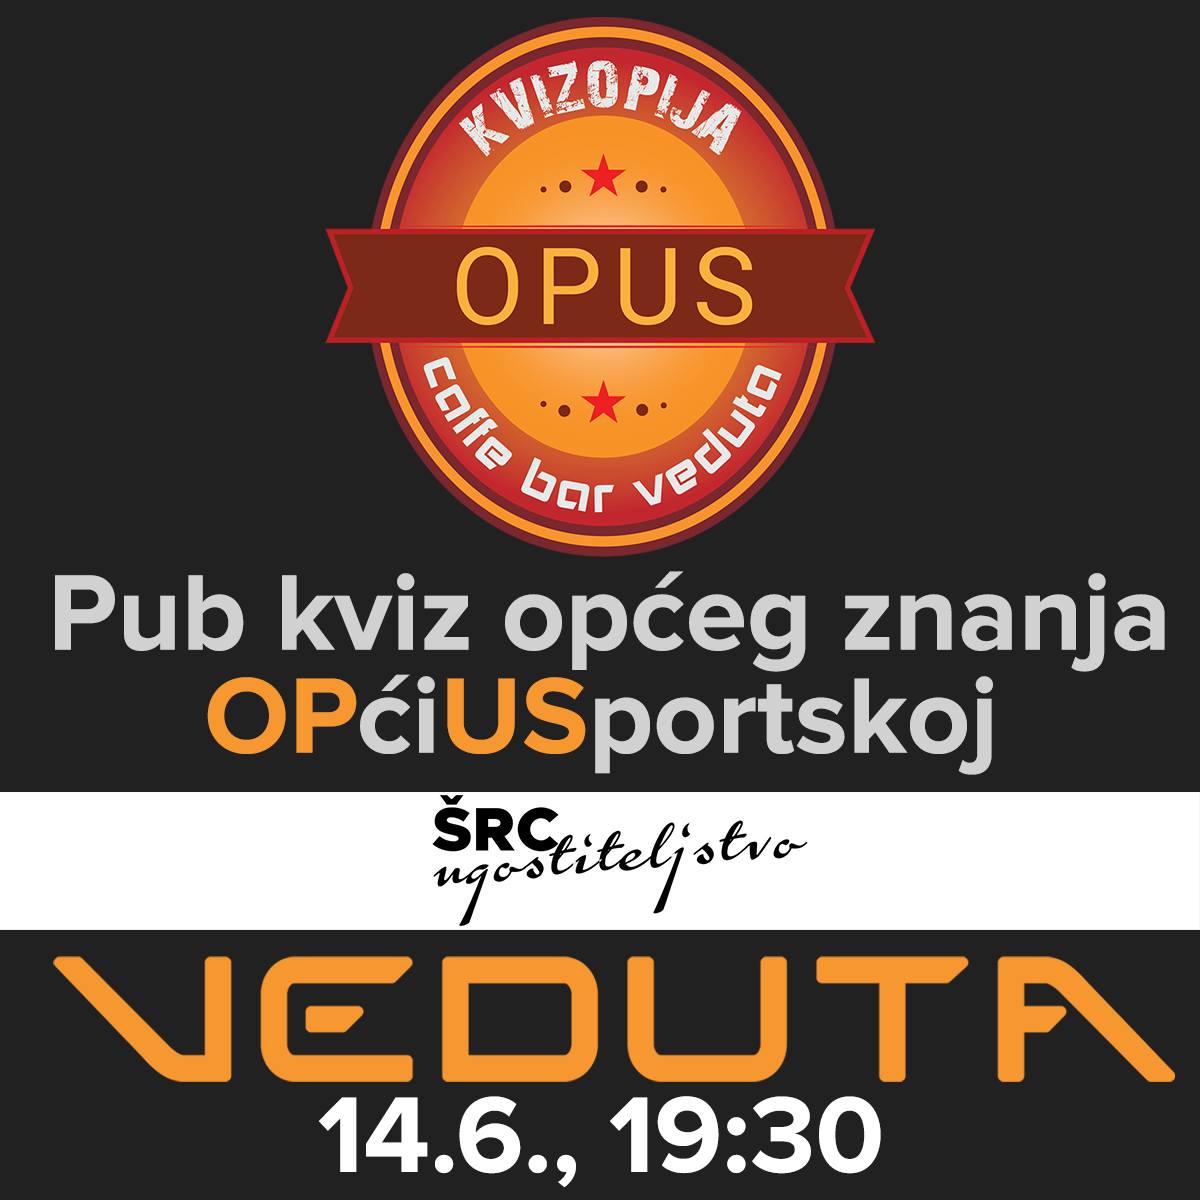 You are currently viewing Pub kviz – OPUS u Caffe baru Veduta